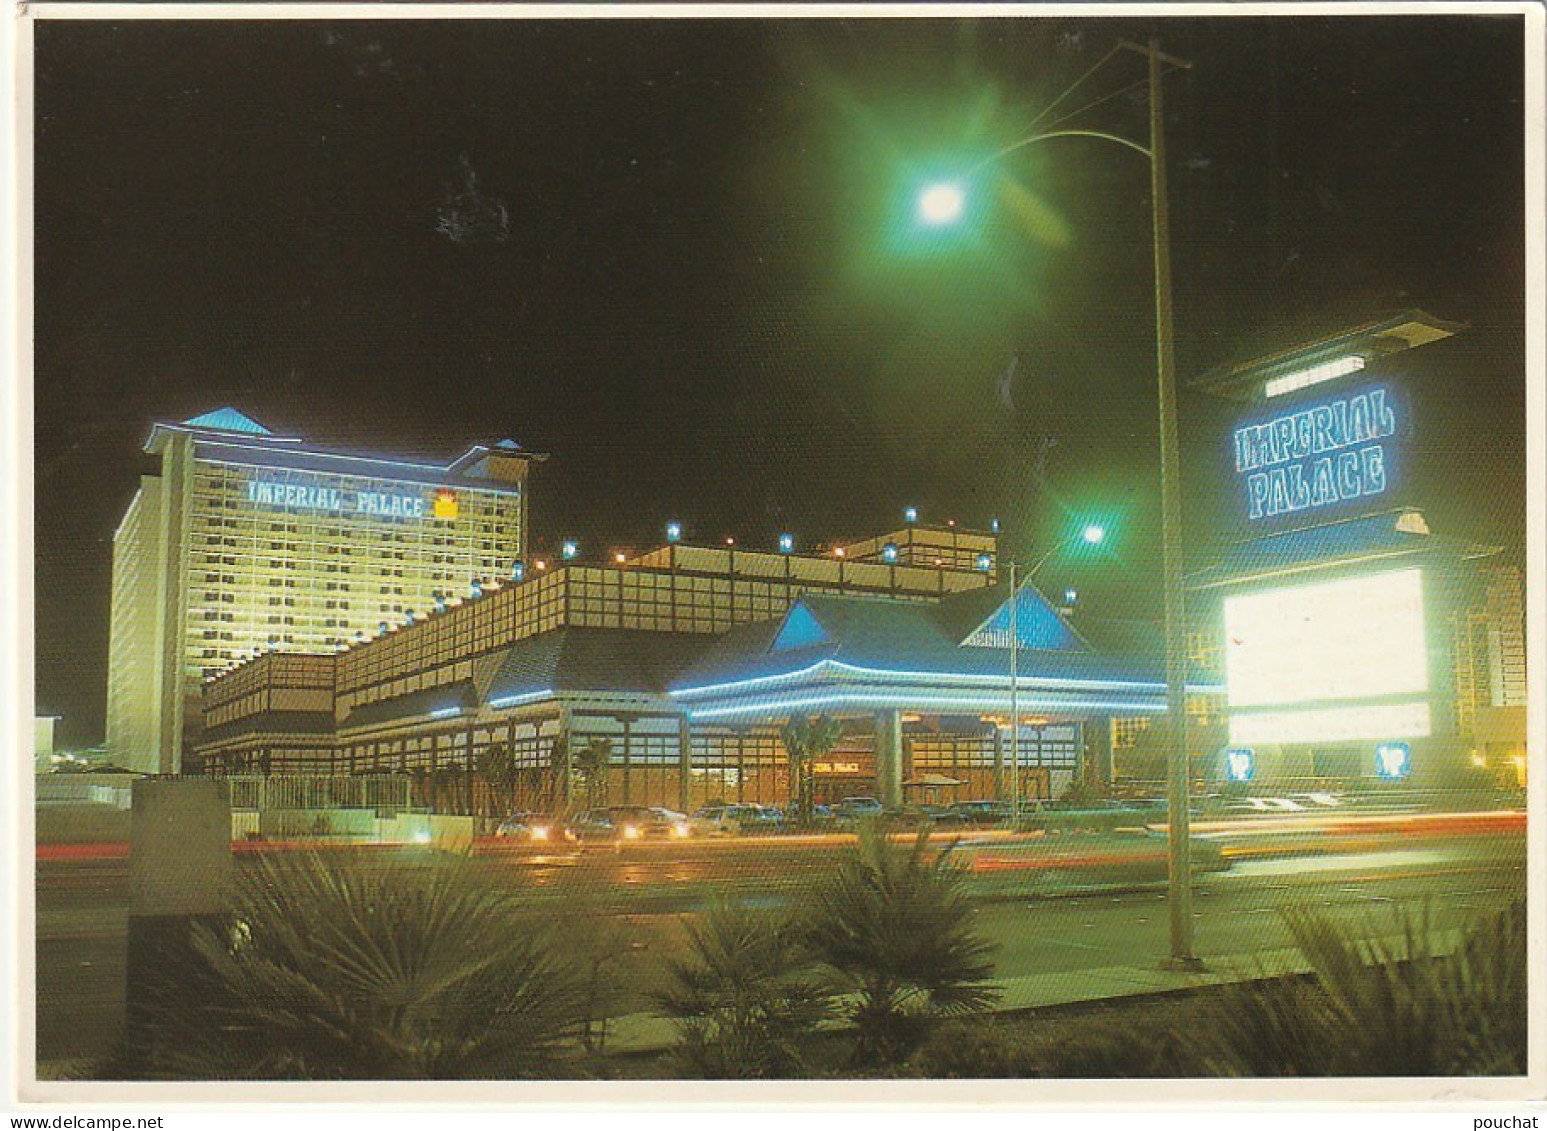 UR -(21) " IMPERIAL PALACE "- HOTEL CASINO , LAS VEGAS , NEVADA - ETATS UNIS D' AMERIQUE - 2 SCANS - Las Vegas